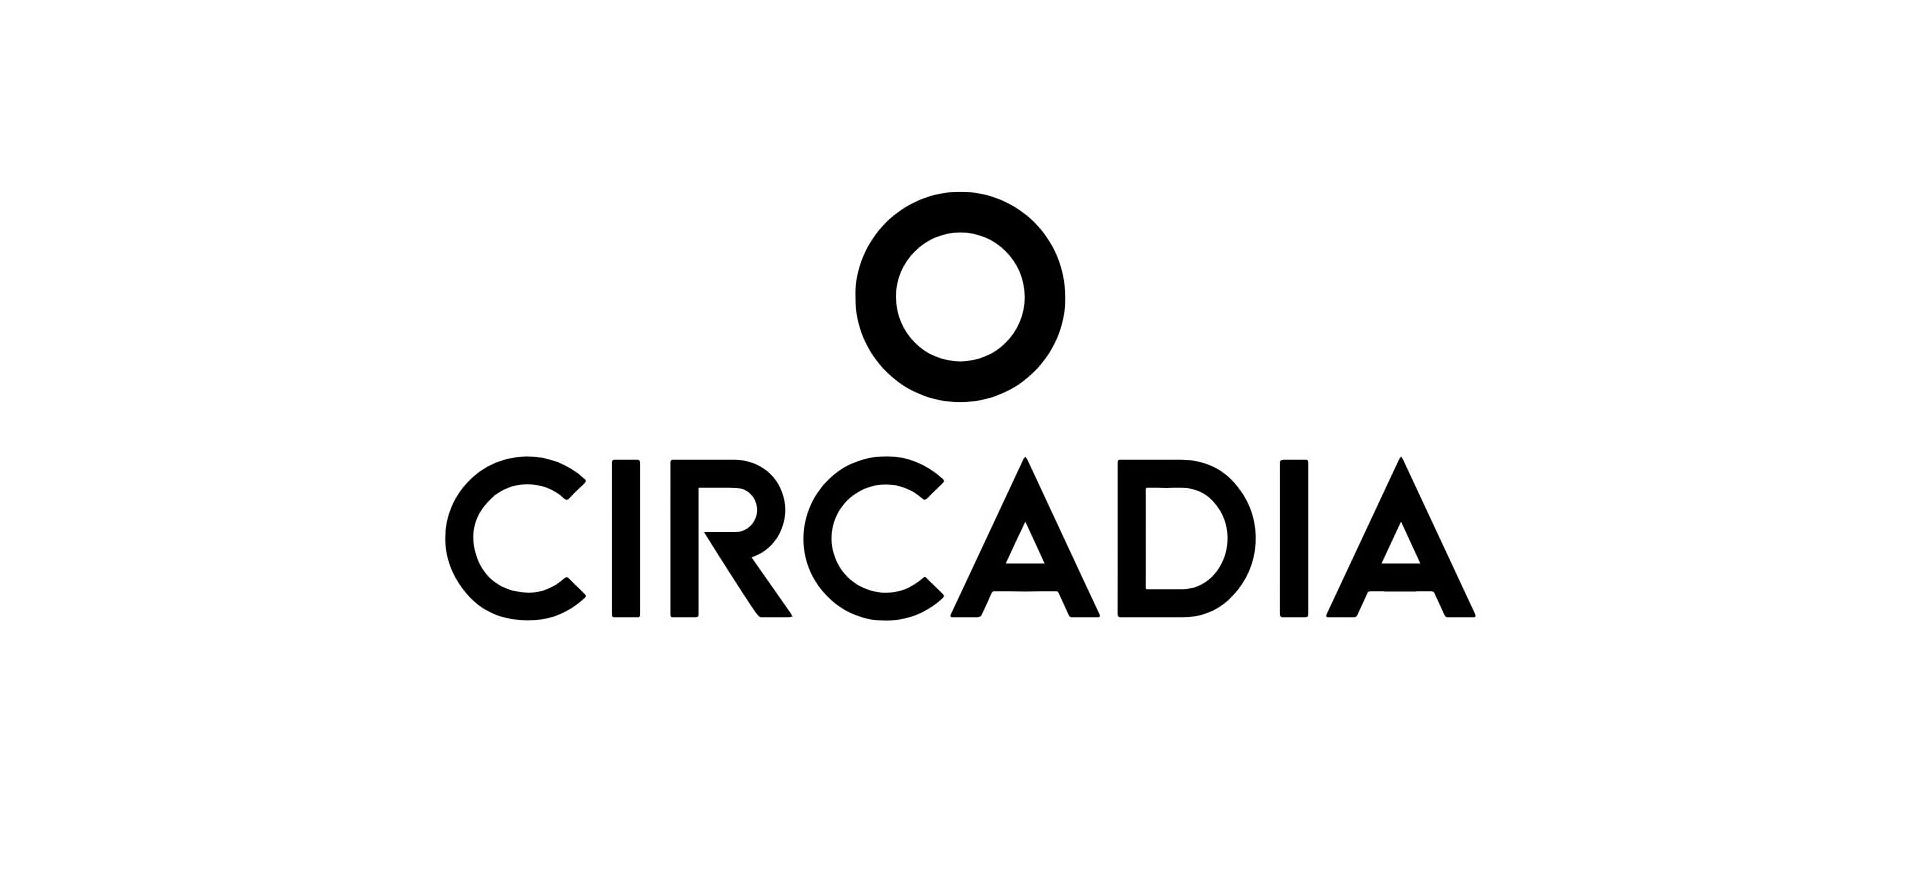 CIRCADIA - Fisher Wallace Laboratories LLC Trademark Registration